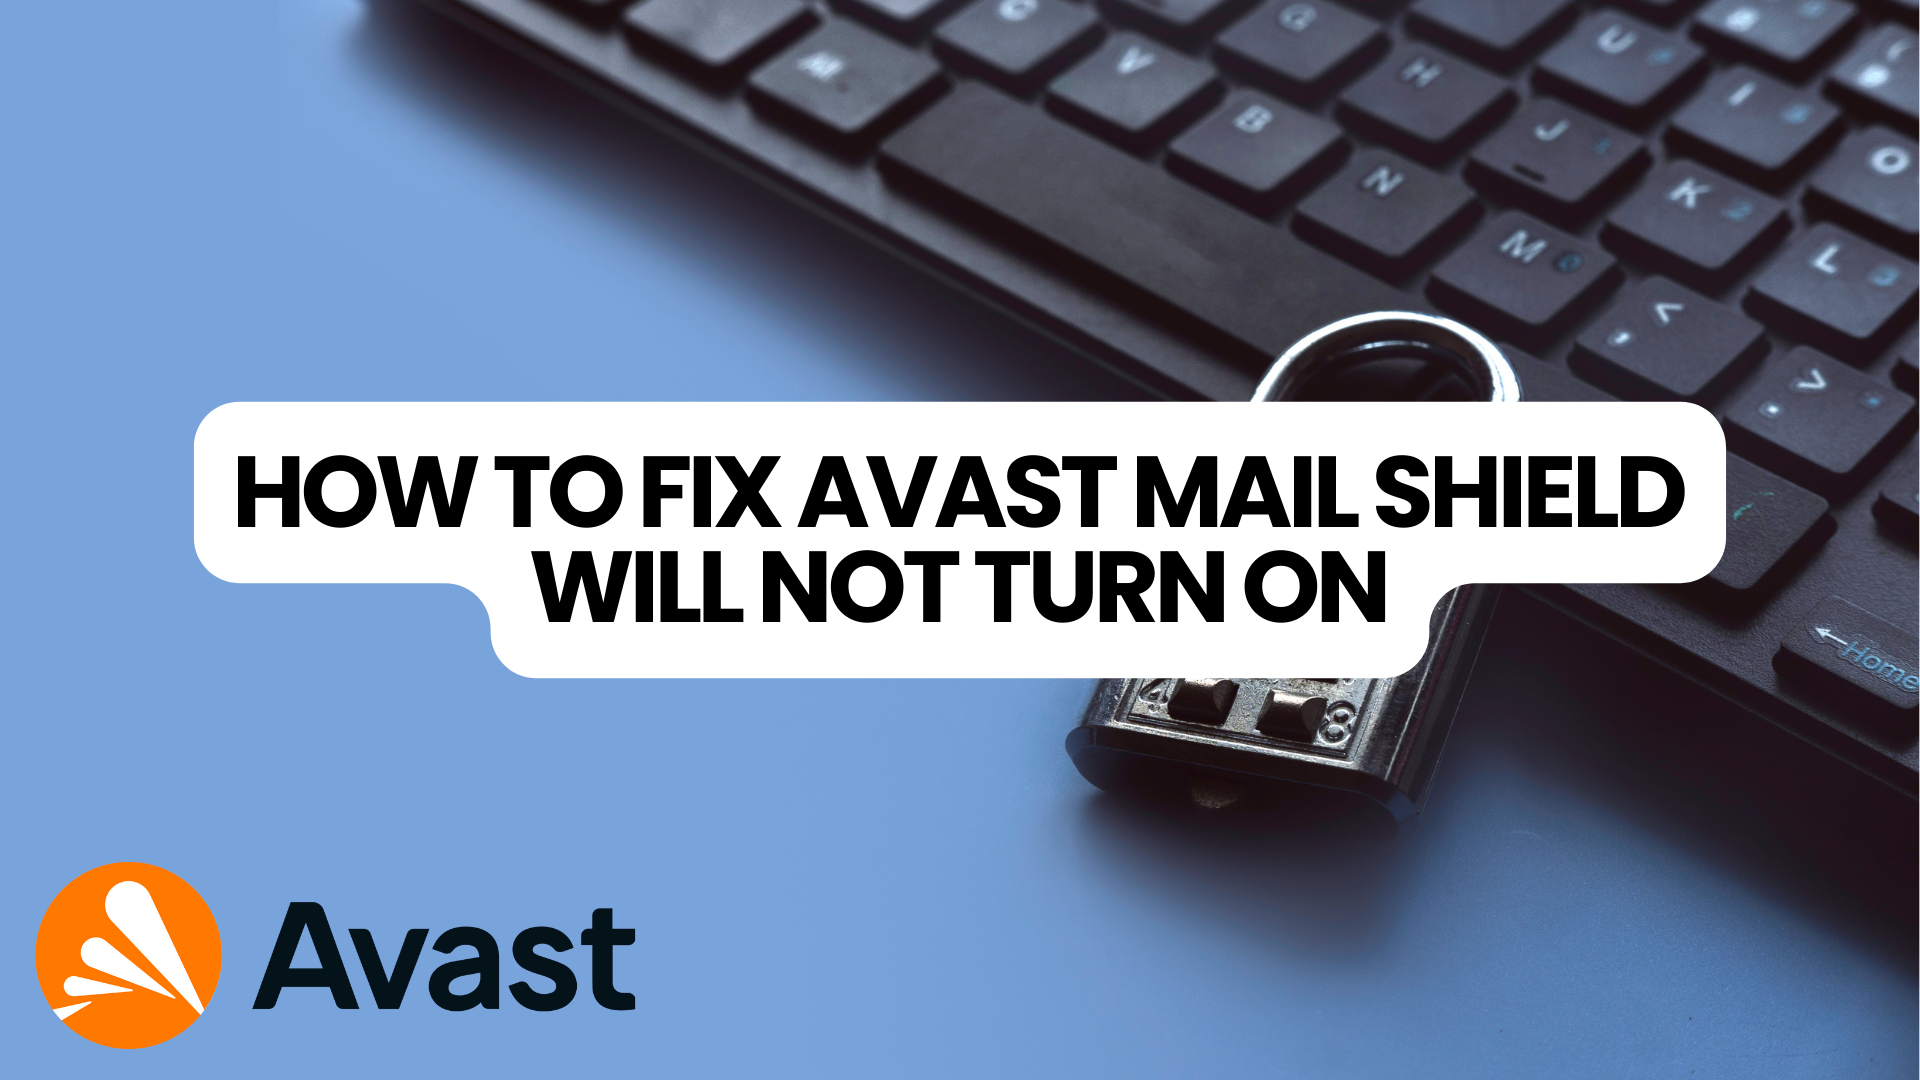 Fix Avast Mail Shield Will Not Turn On